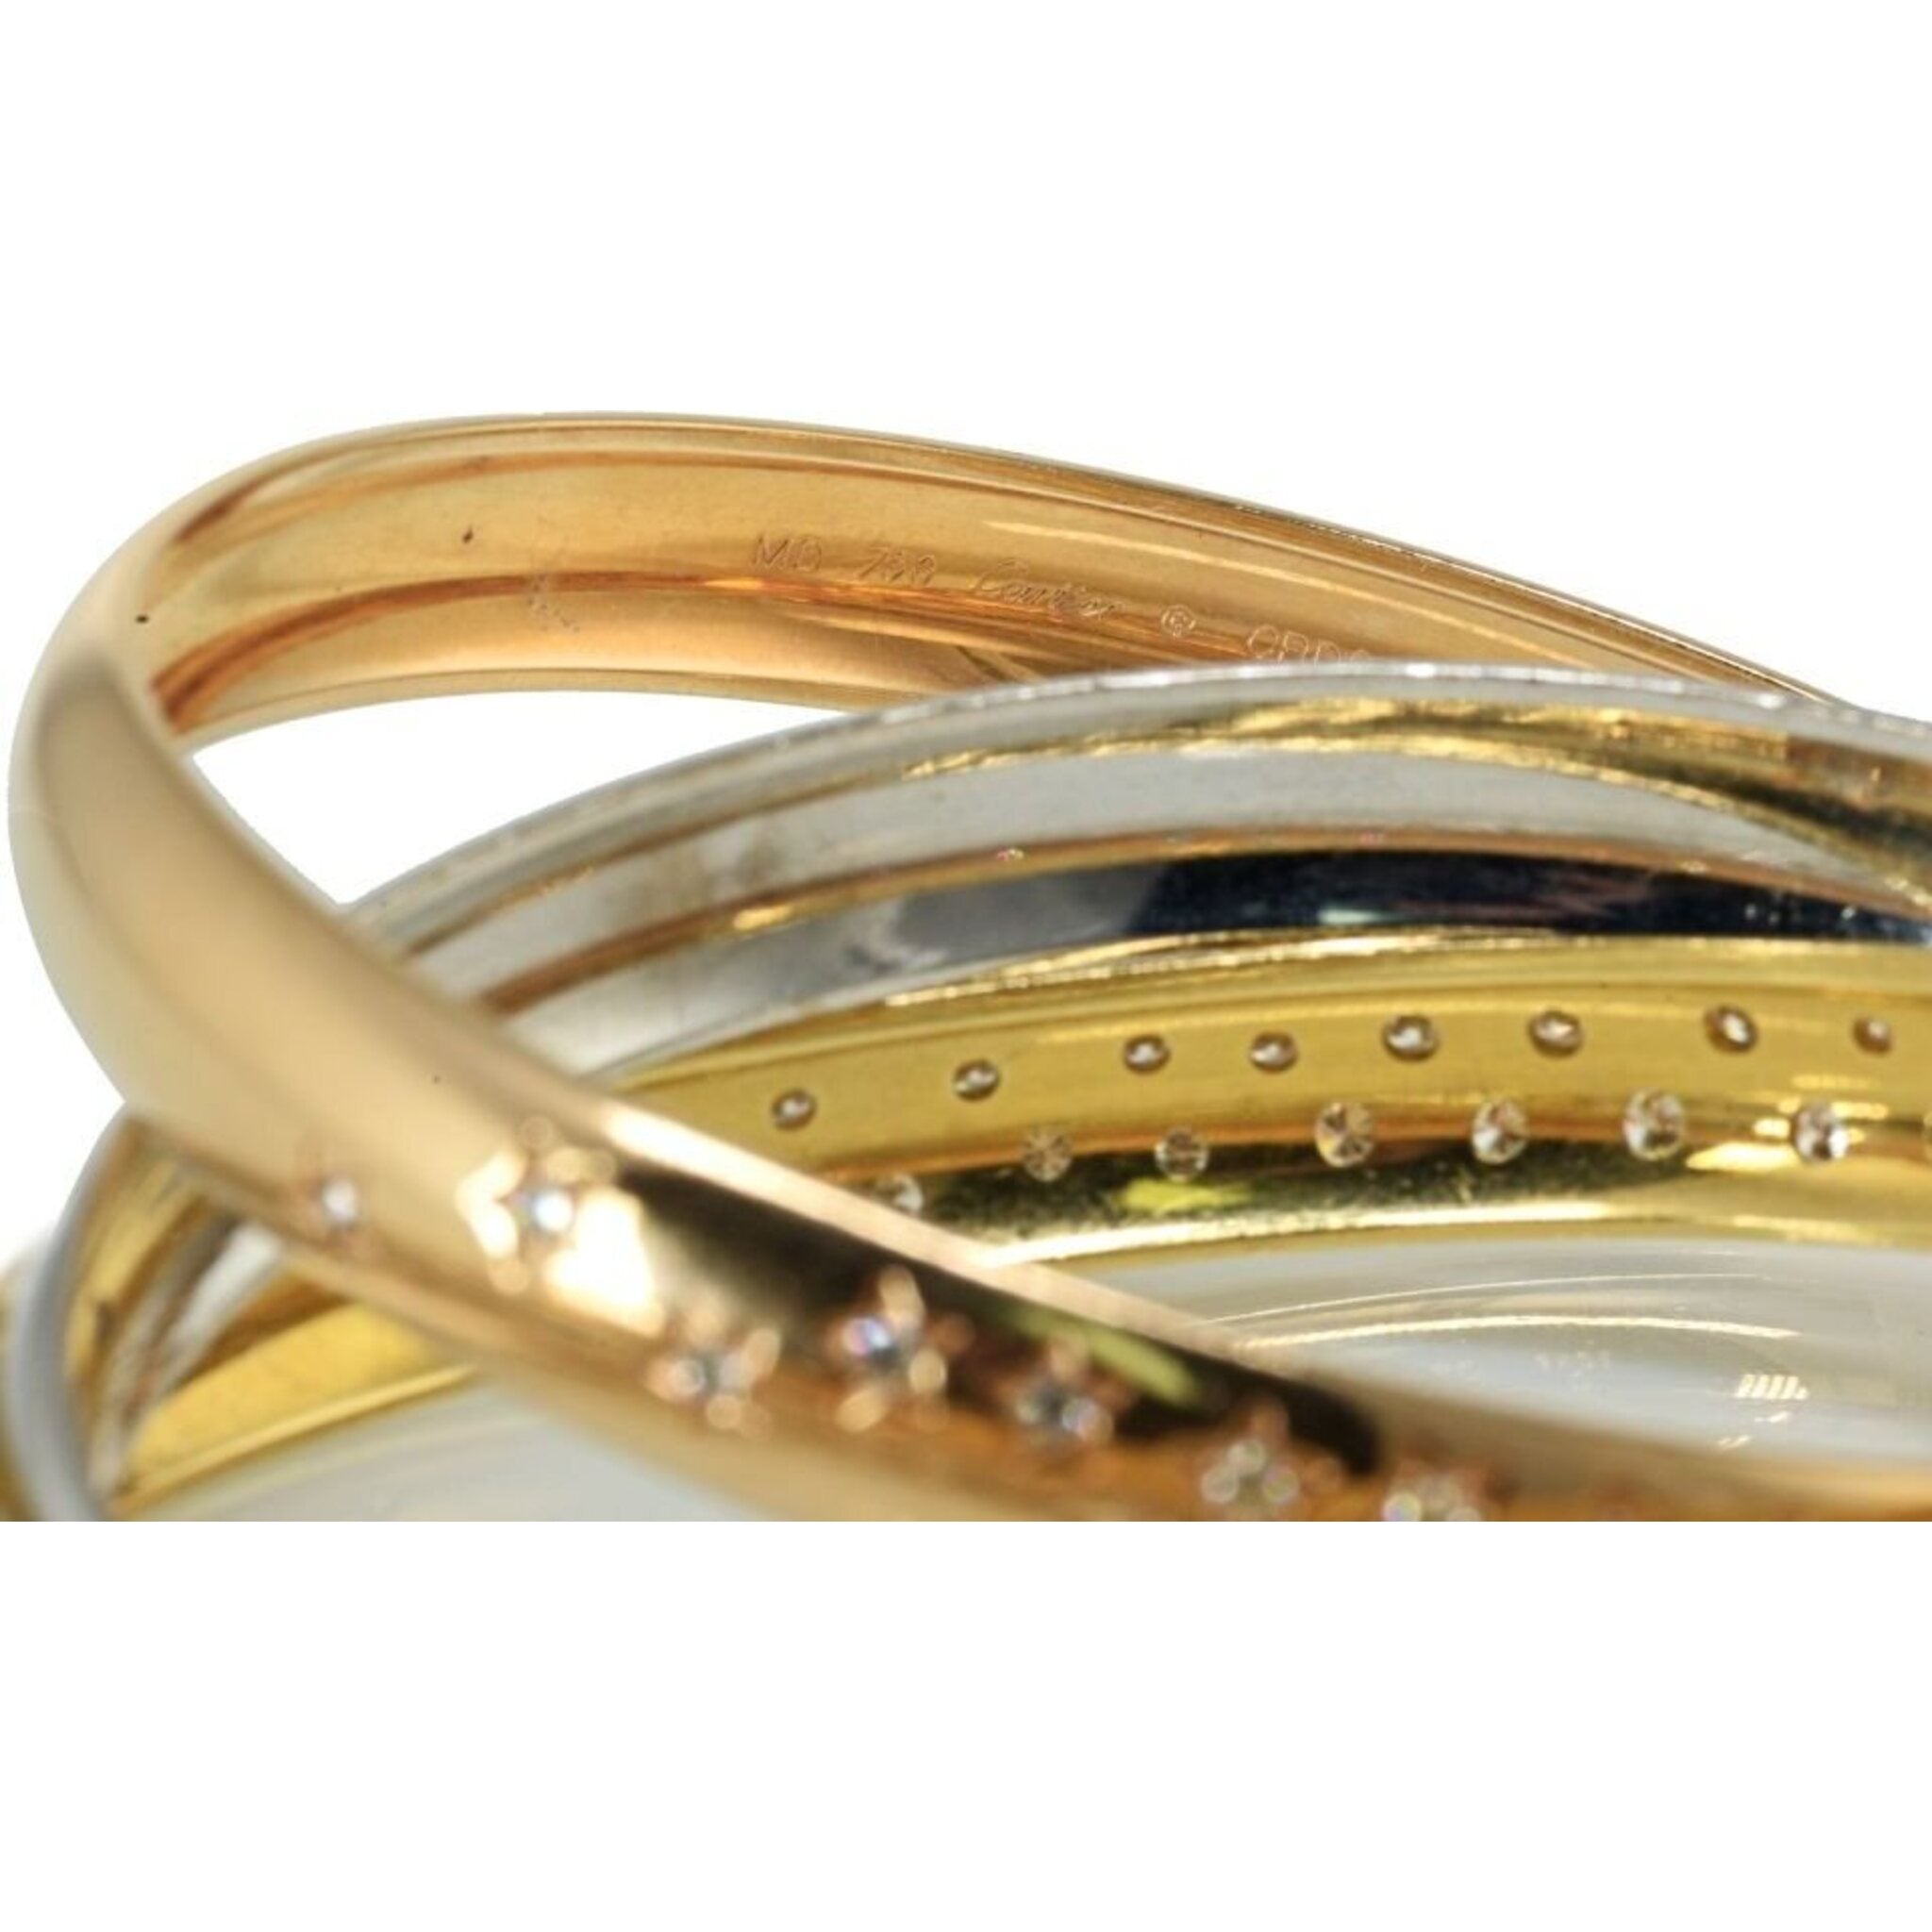 Sell Cartier Trinity Bracelet - Black/Gold/Silver